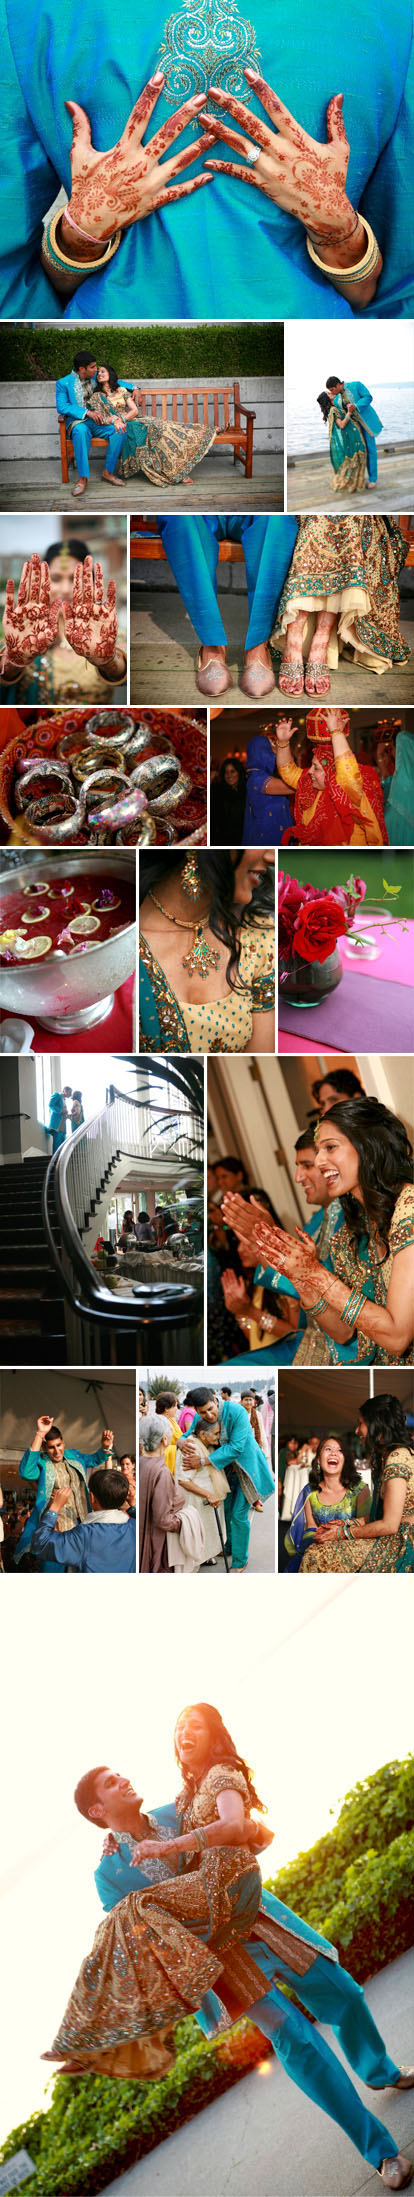 One Thousand Words Photography, Sangeet celebration, traditional Indian wedding